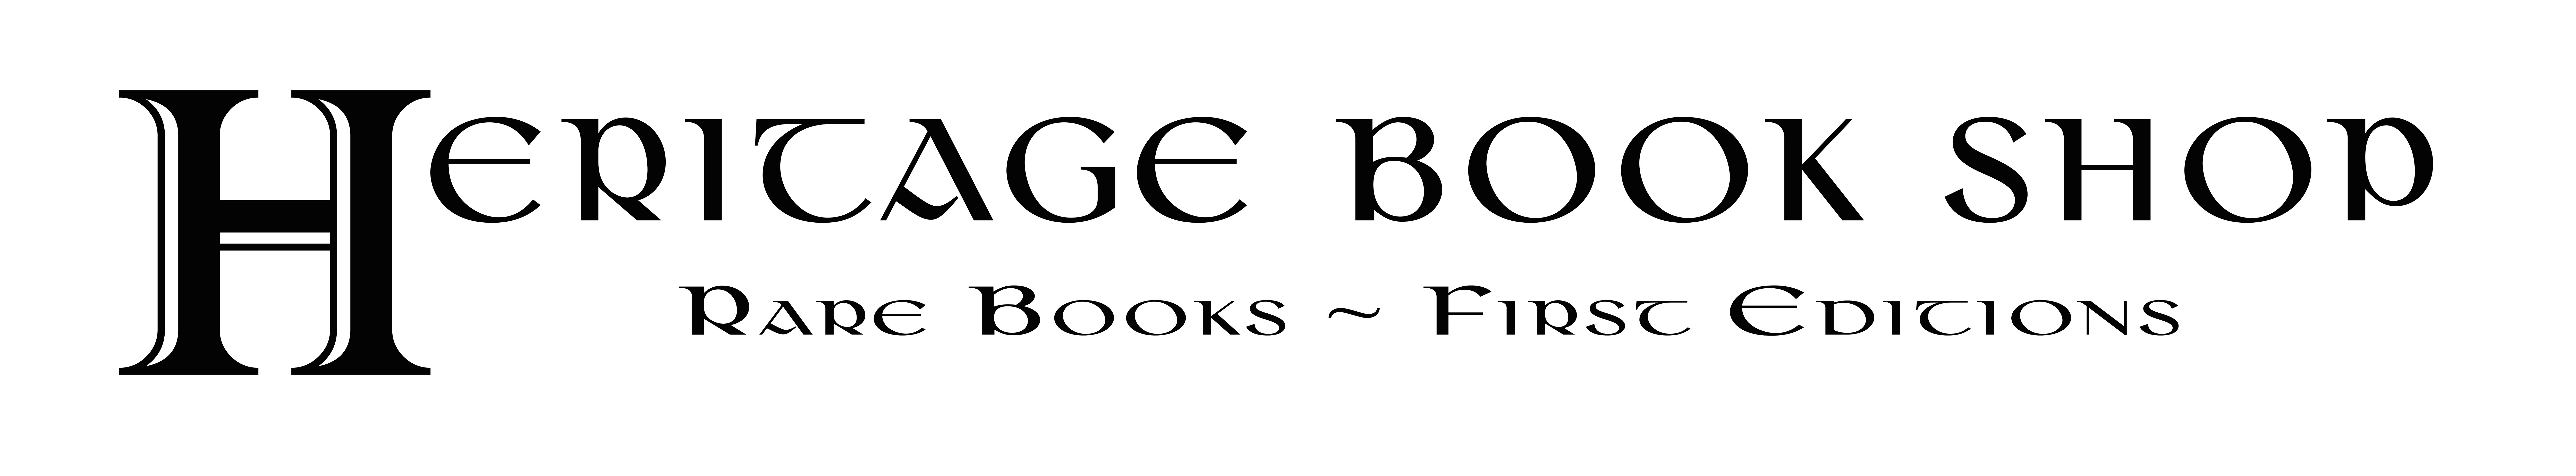 Heritage Book Shop, LLC